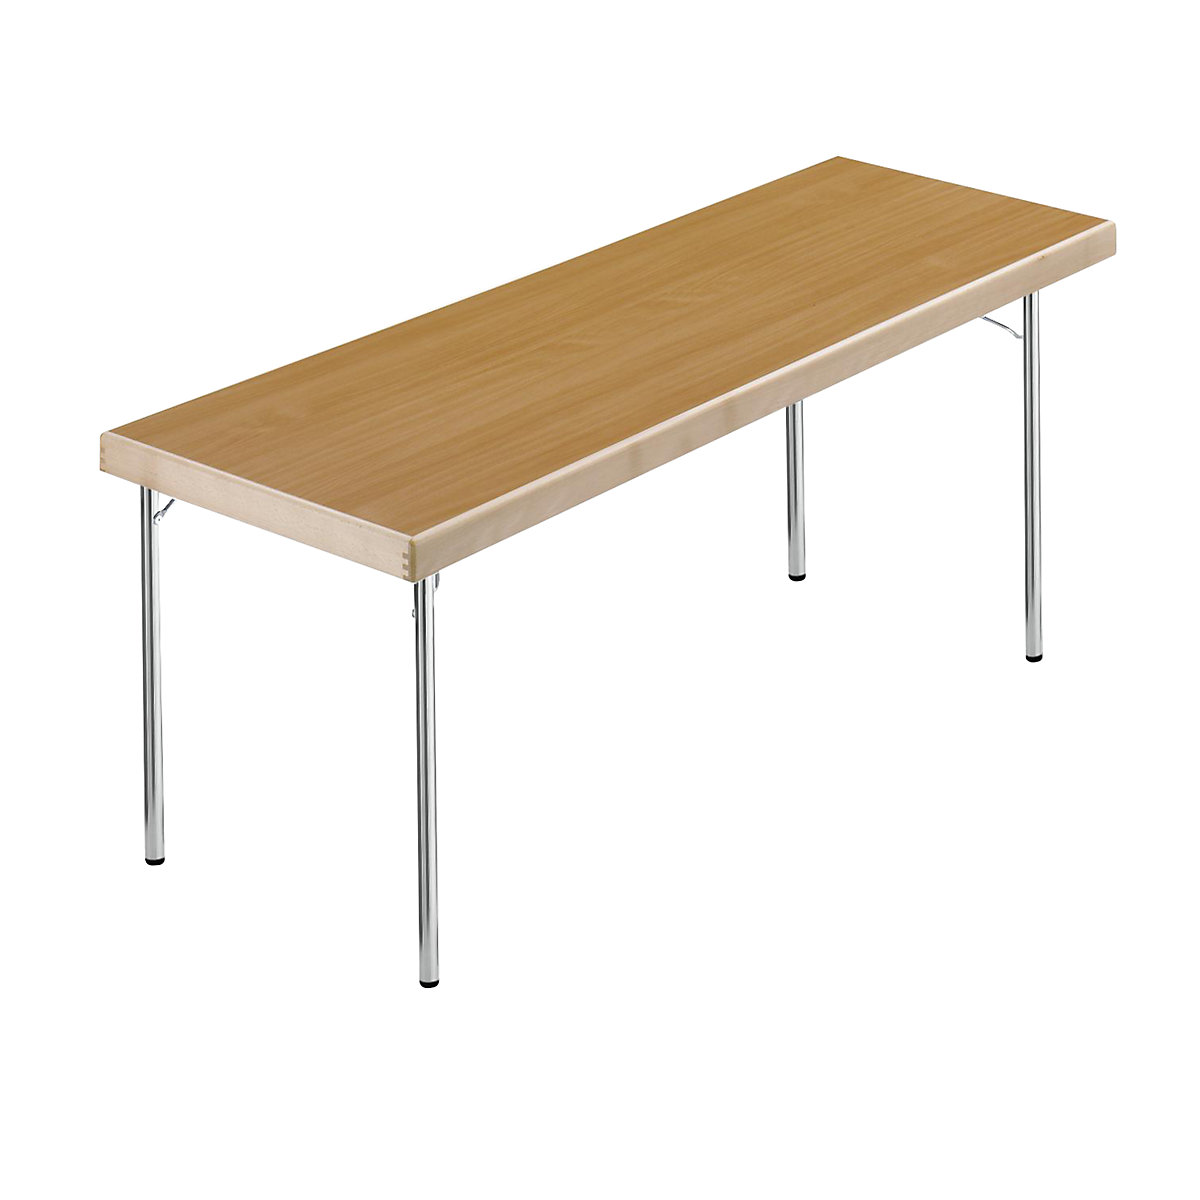 Sklápací stôl, podstavec so 4 nohami, 1700 x 700 mm, podstavec pochrómovaný, doska vzor buk-7